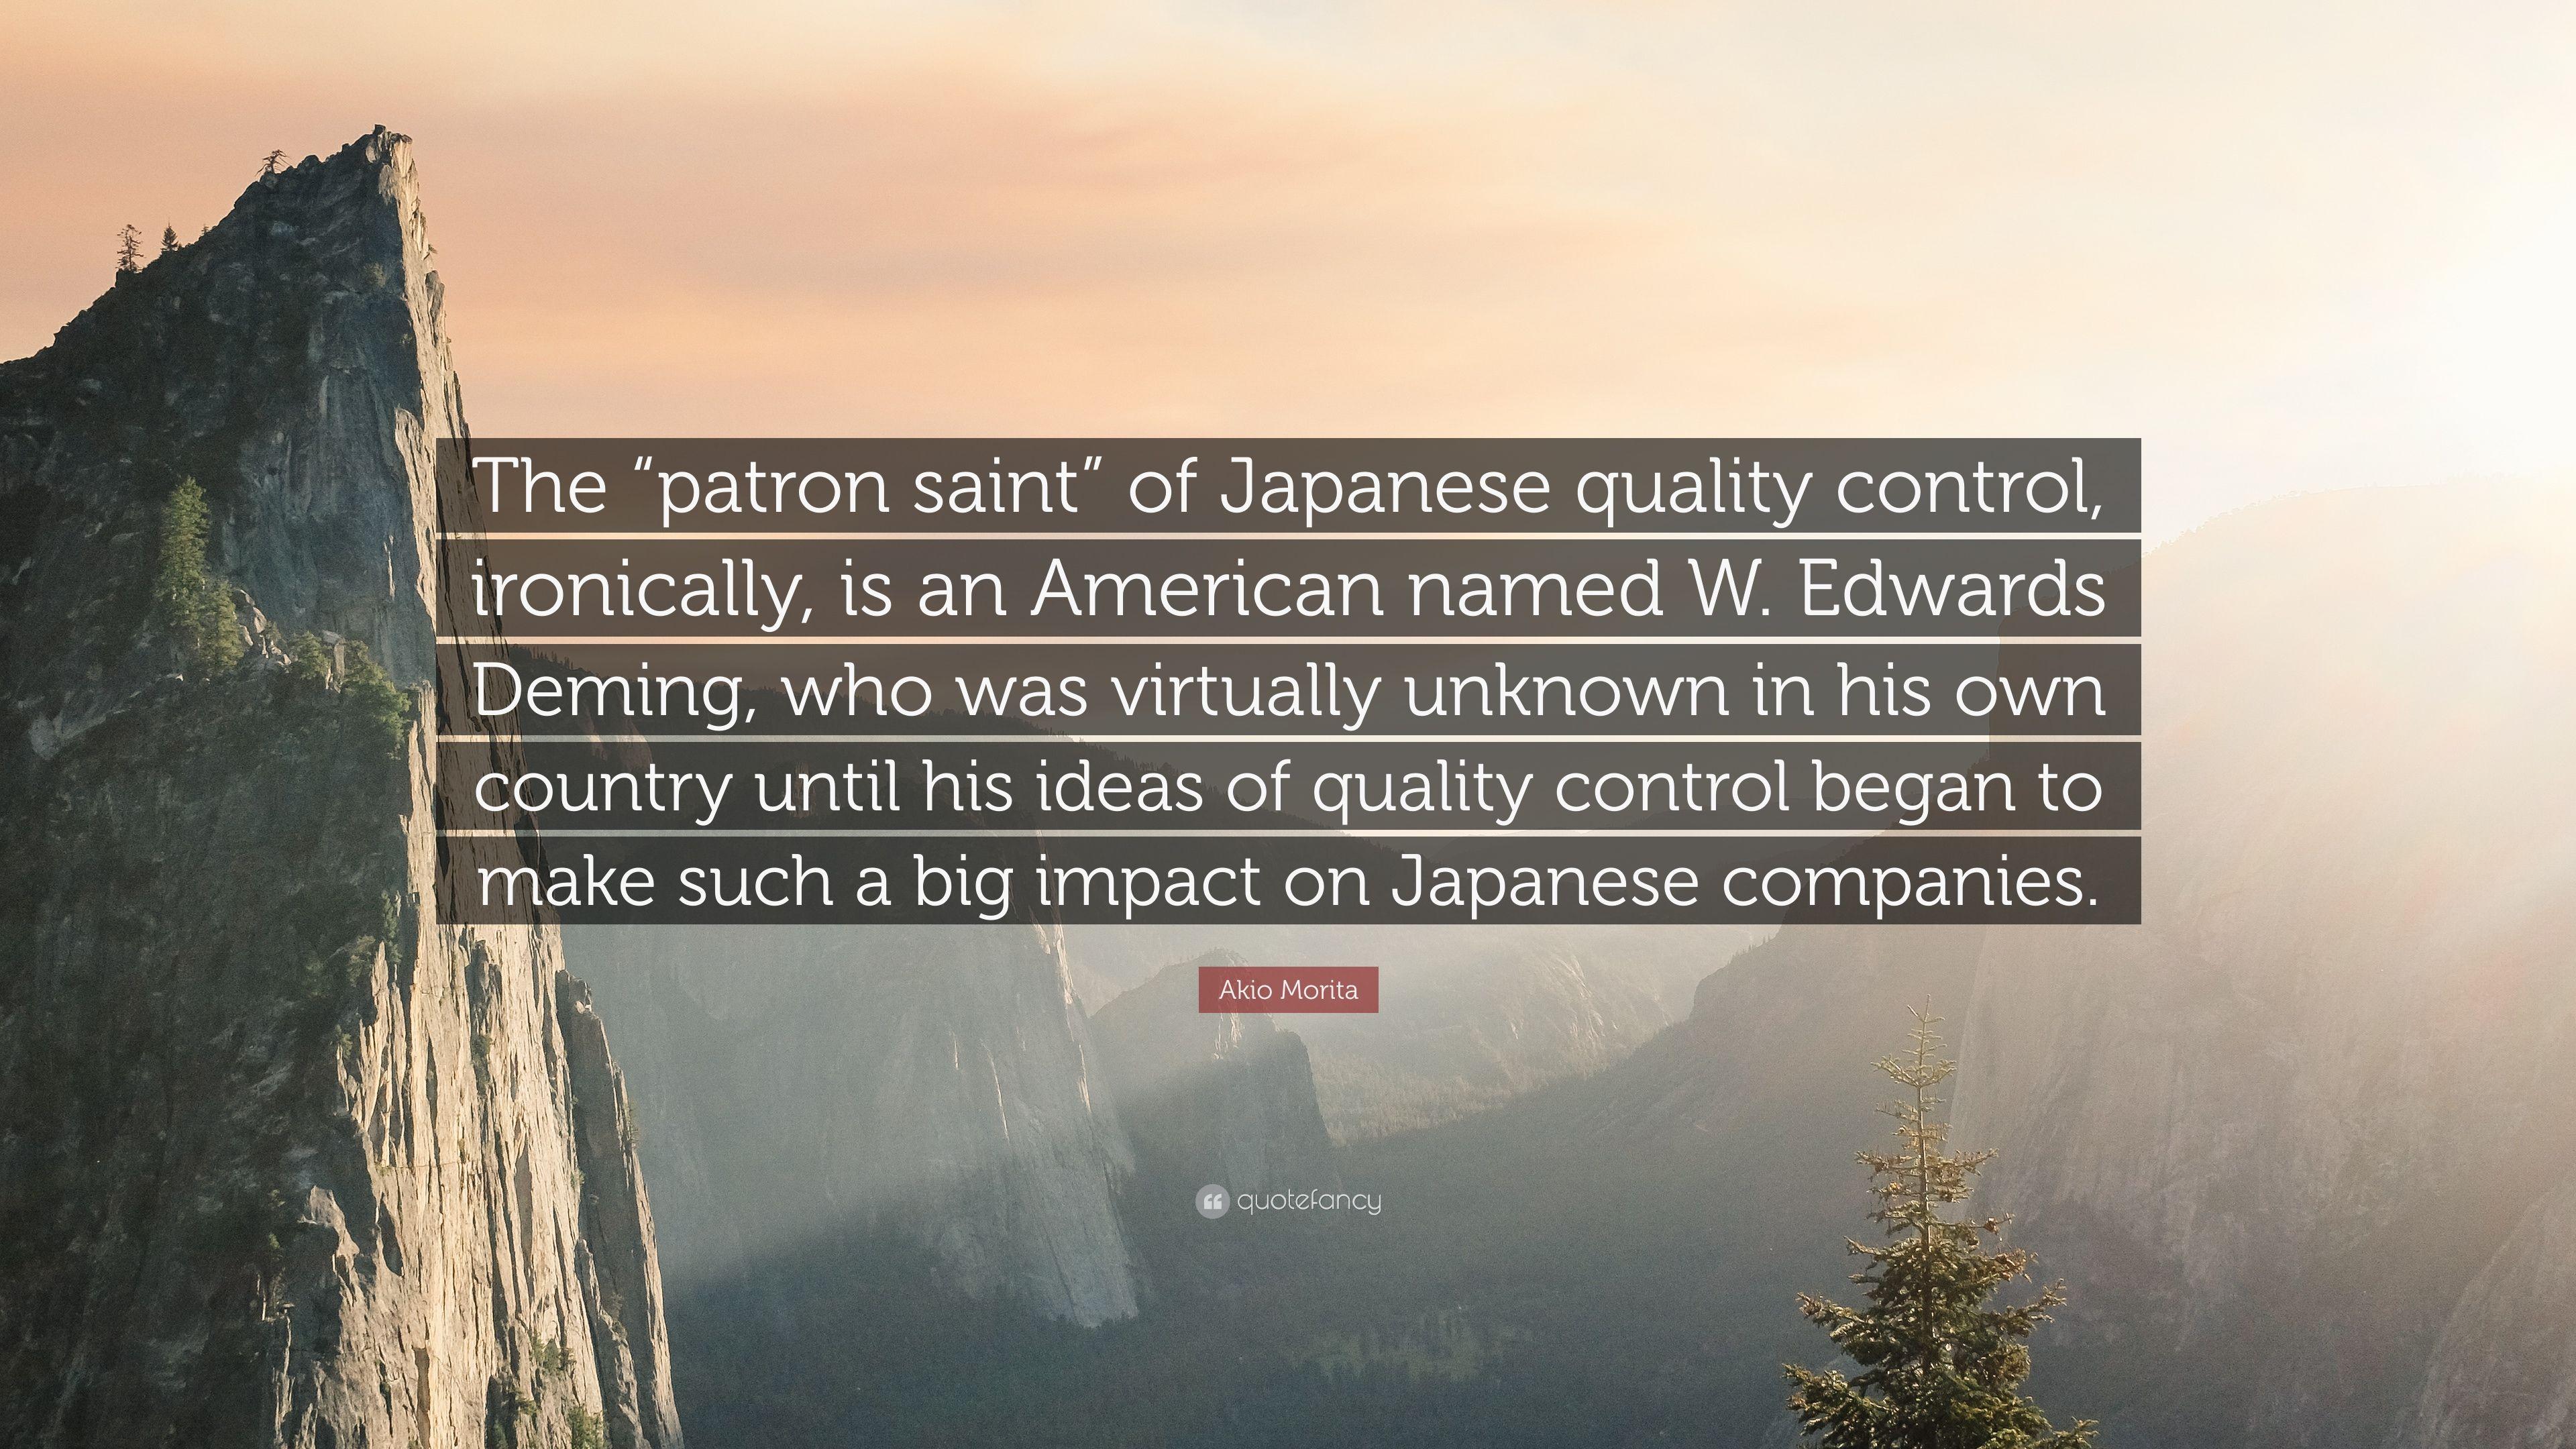 Akio Morita Quote: “The “patron saint” of Japanese quality control